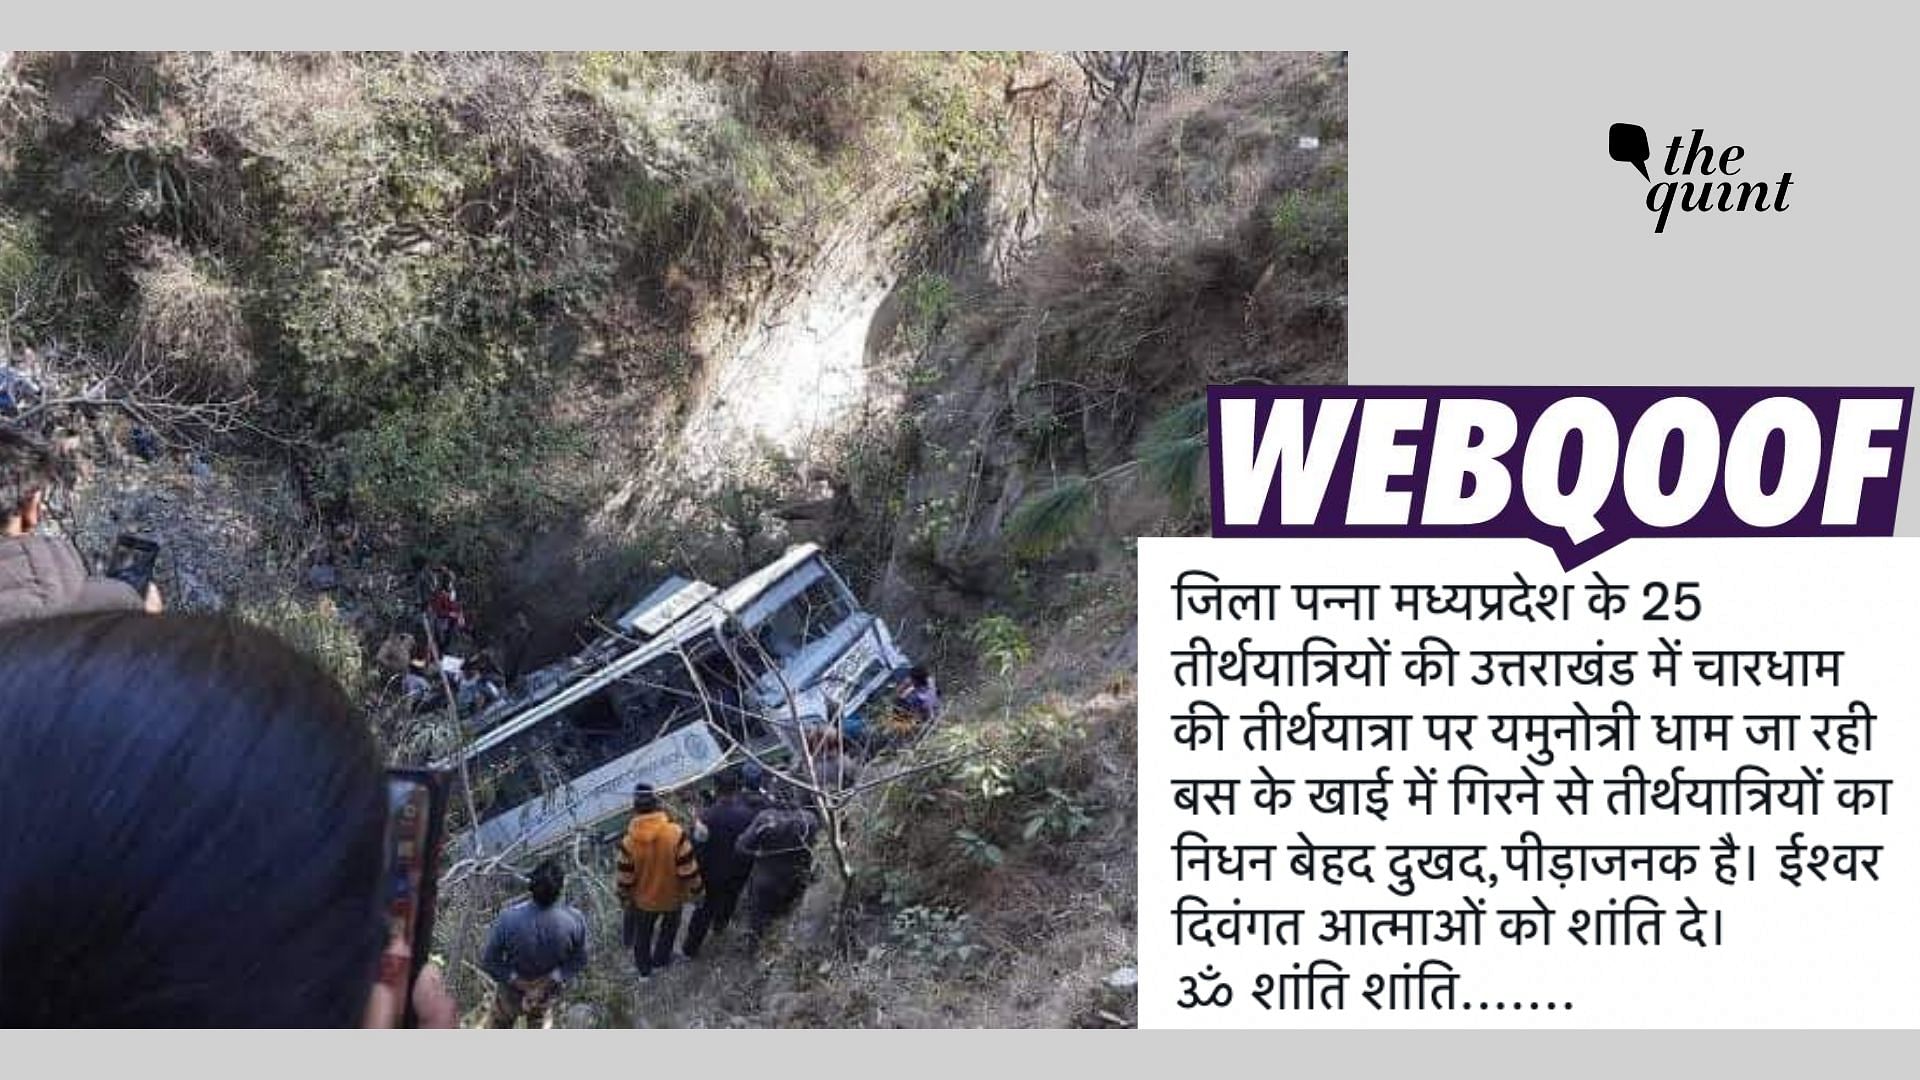 <div class="paragraphs"><p>The photo shows a bus accident in Himachal Pradesh.</p></div>